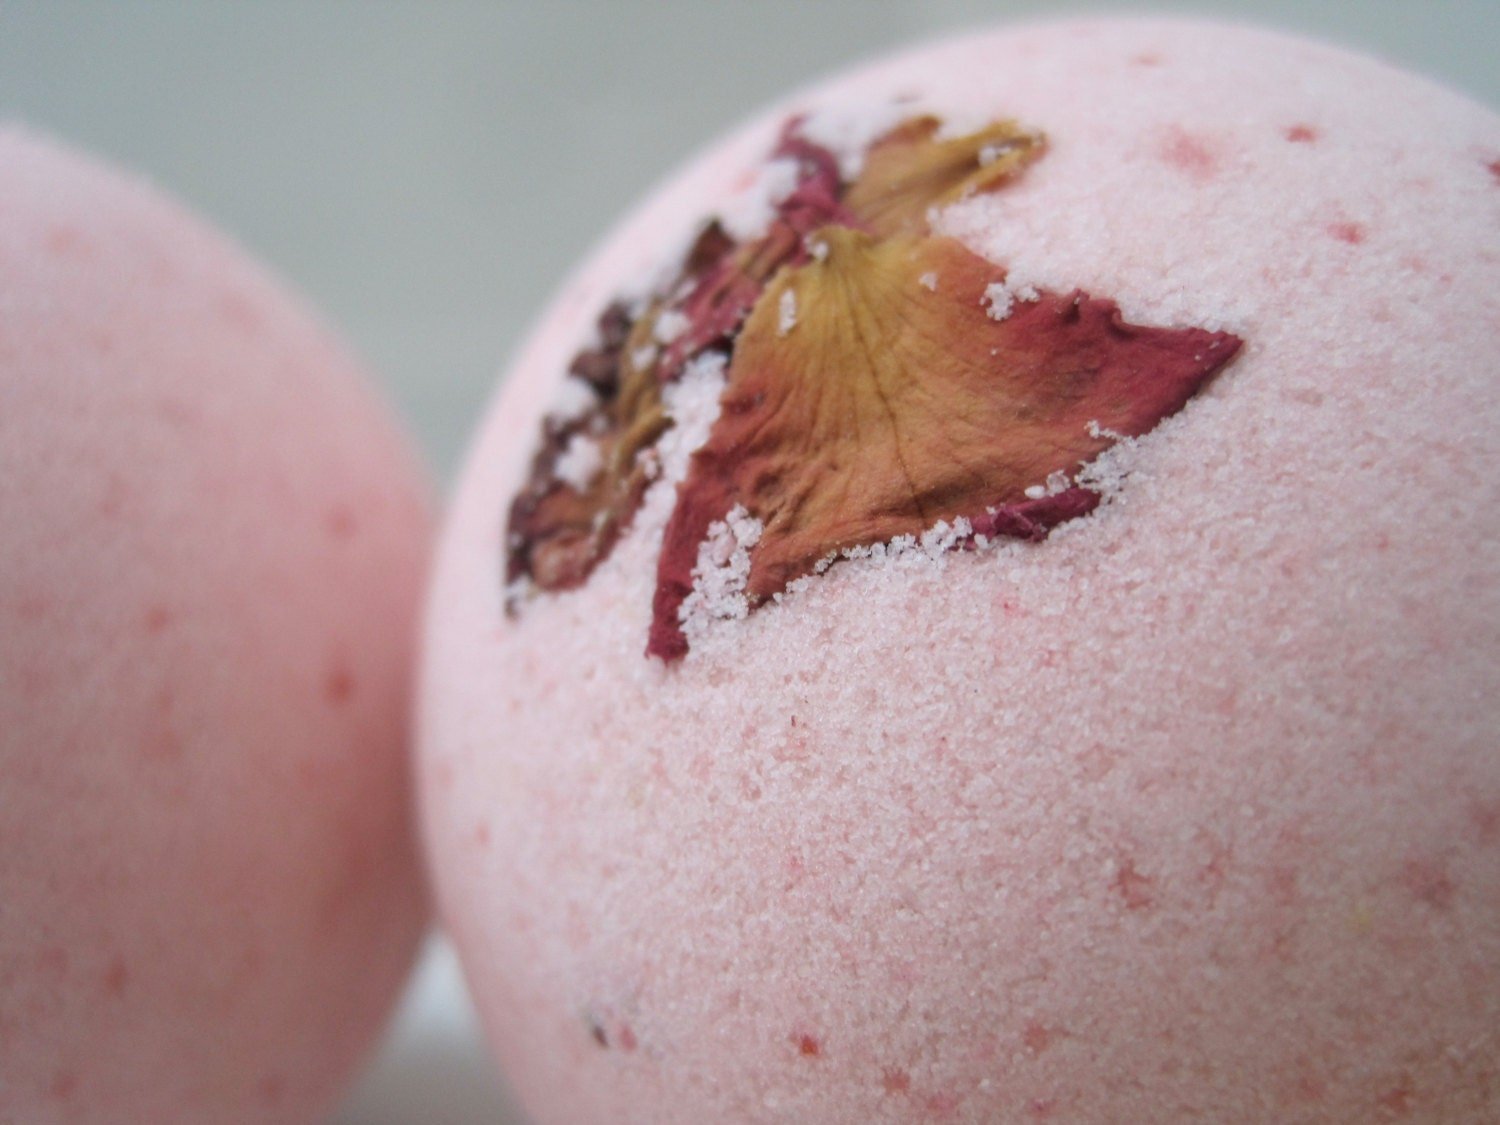 Rose Scented Bath Bombs with Handmade Soap Inside - 2 ct - Berwyn Betty's Bath & Body Shop